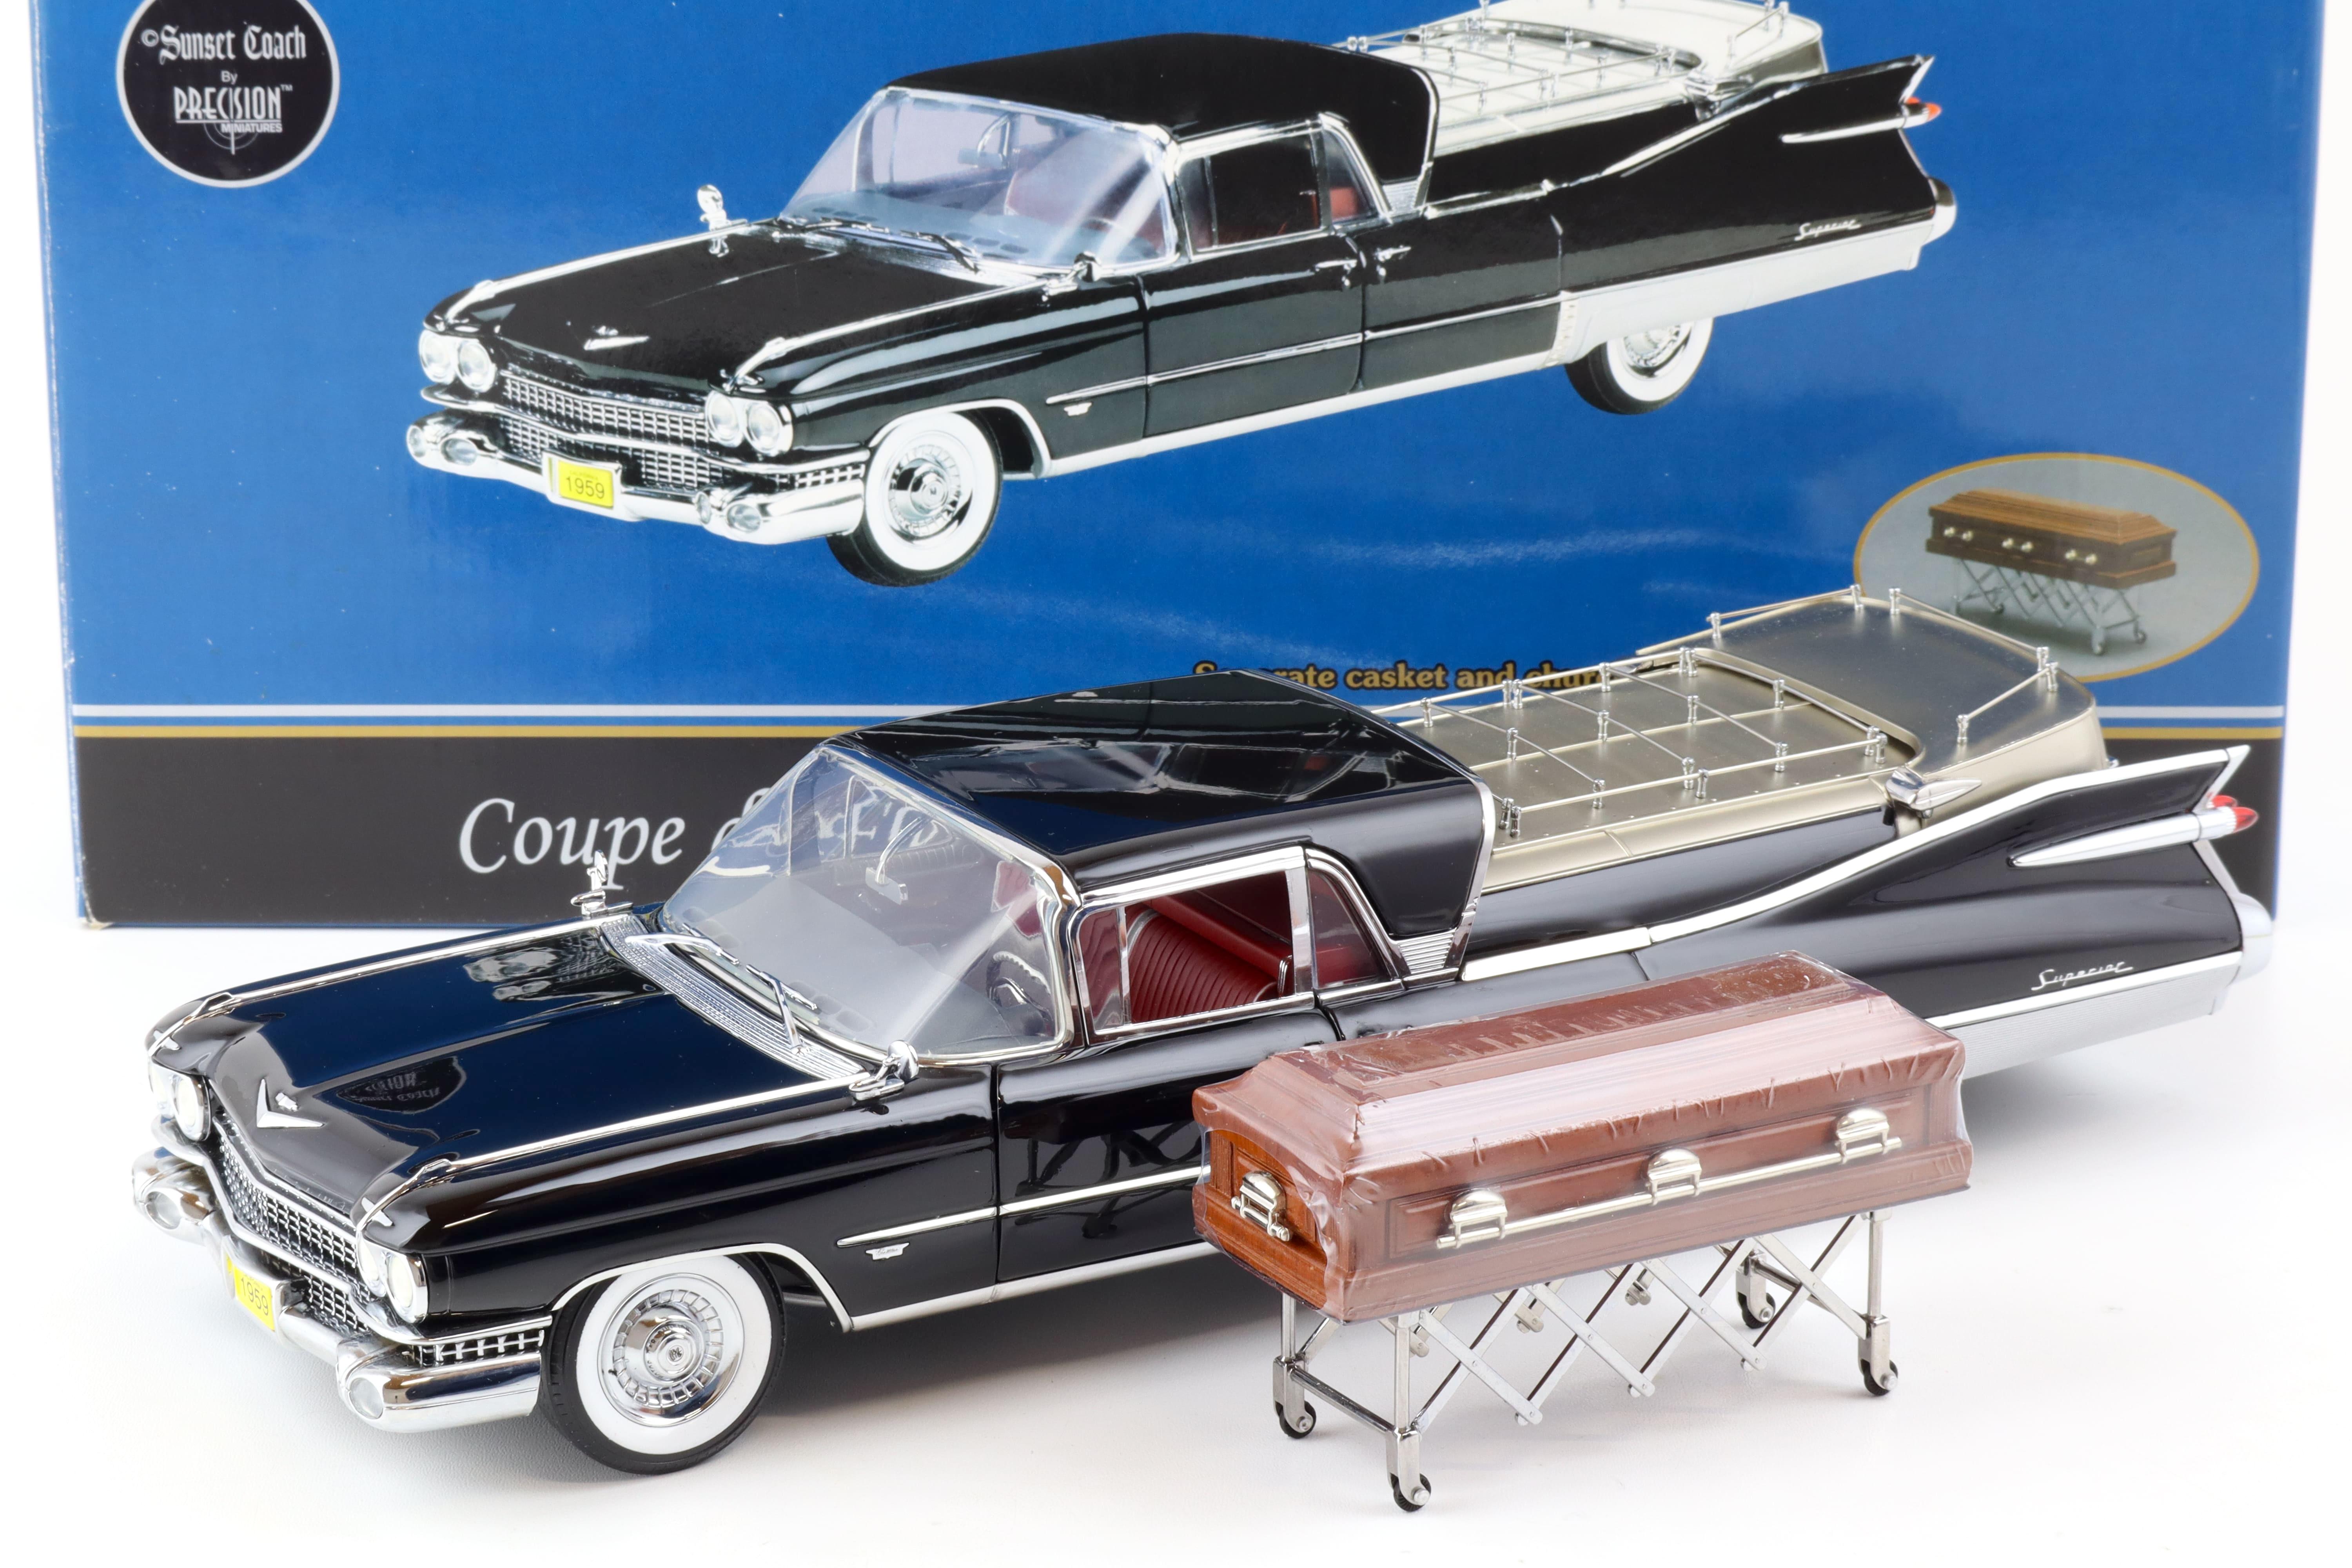 1:18 Sunset Coach Precision 1959 Cadillac Superior HEARSE Coupe de Fleur black